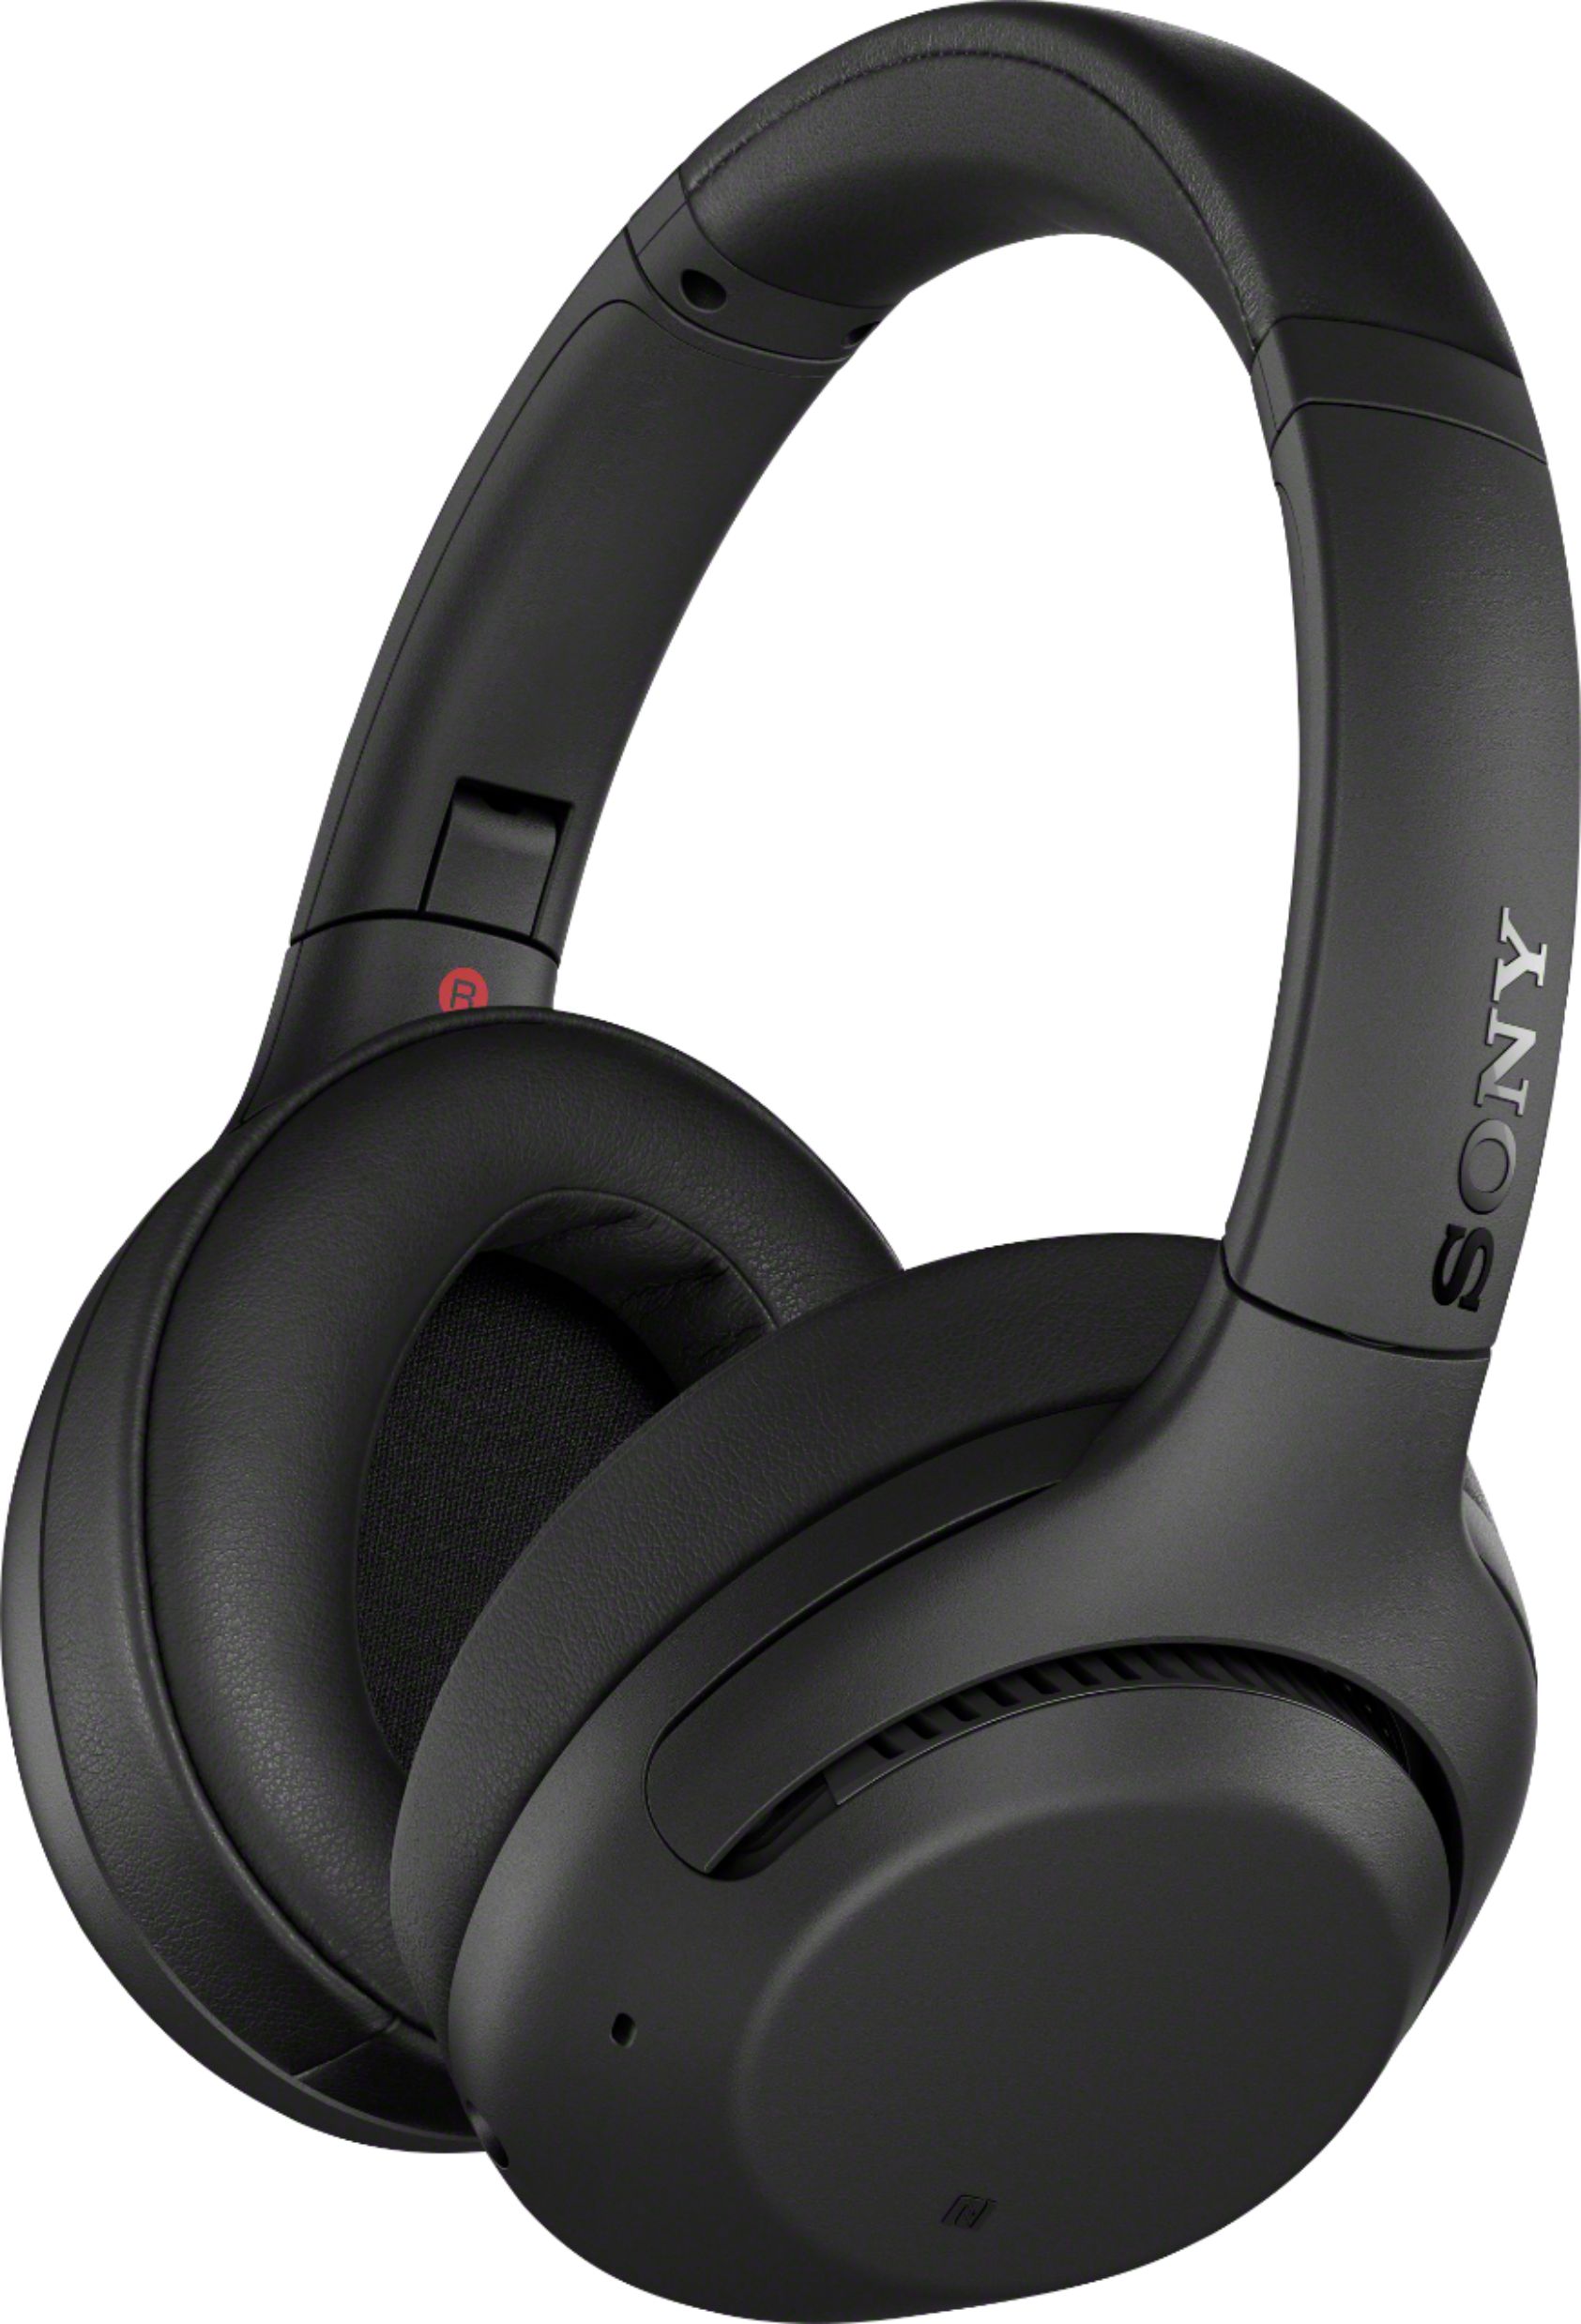 Sony WHXB900N Wireless Noise Canceling OvertheEar Headphones Black